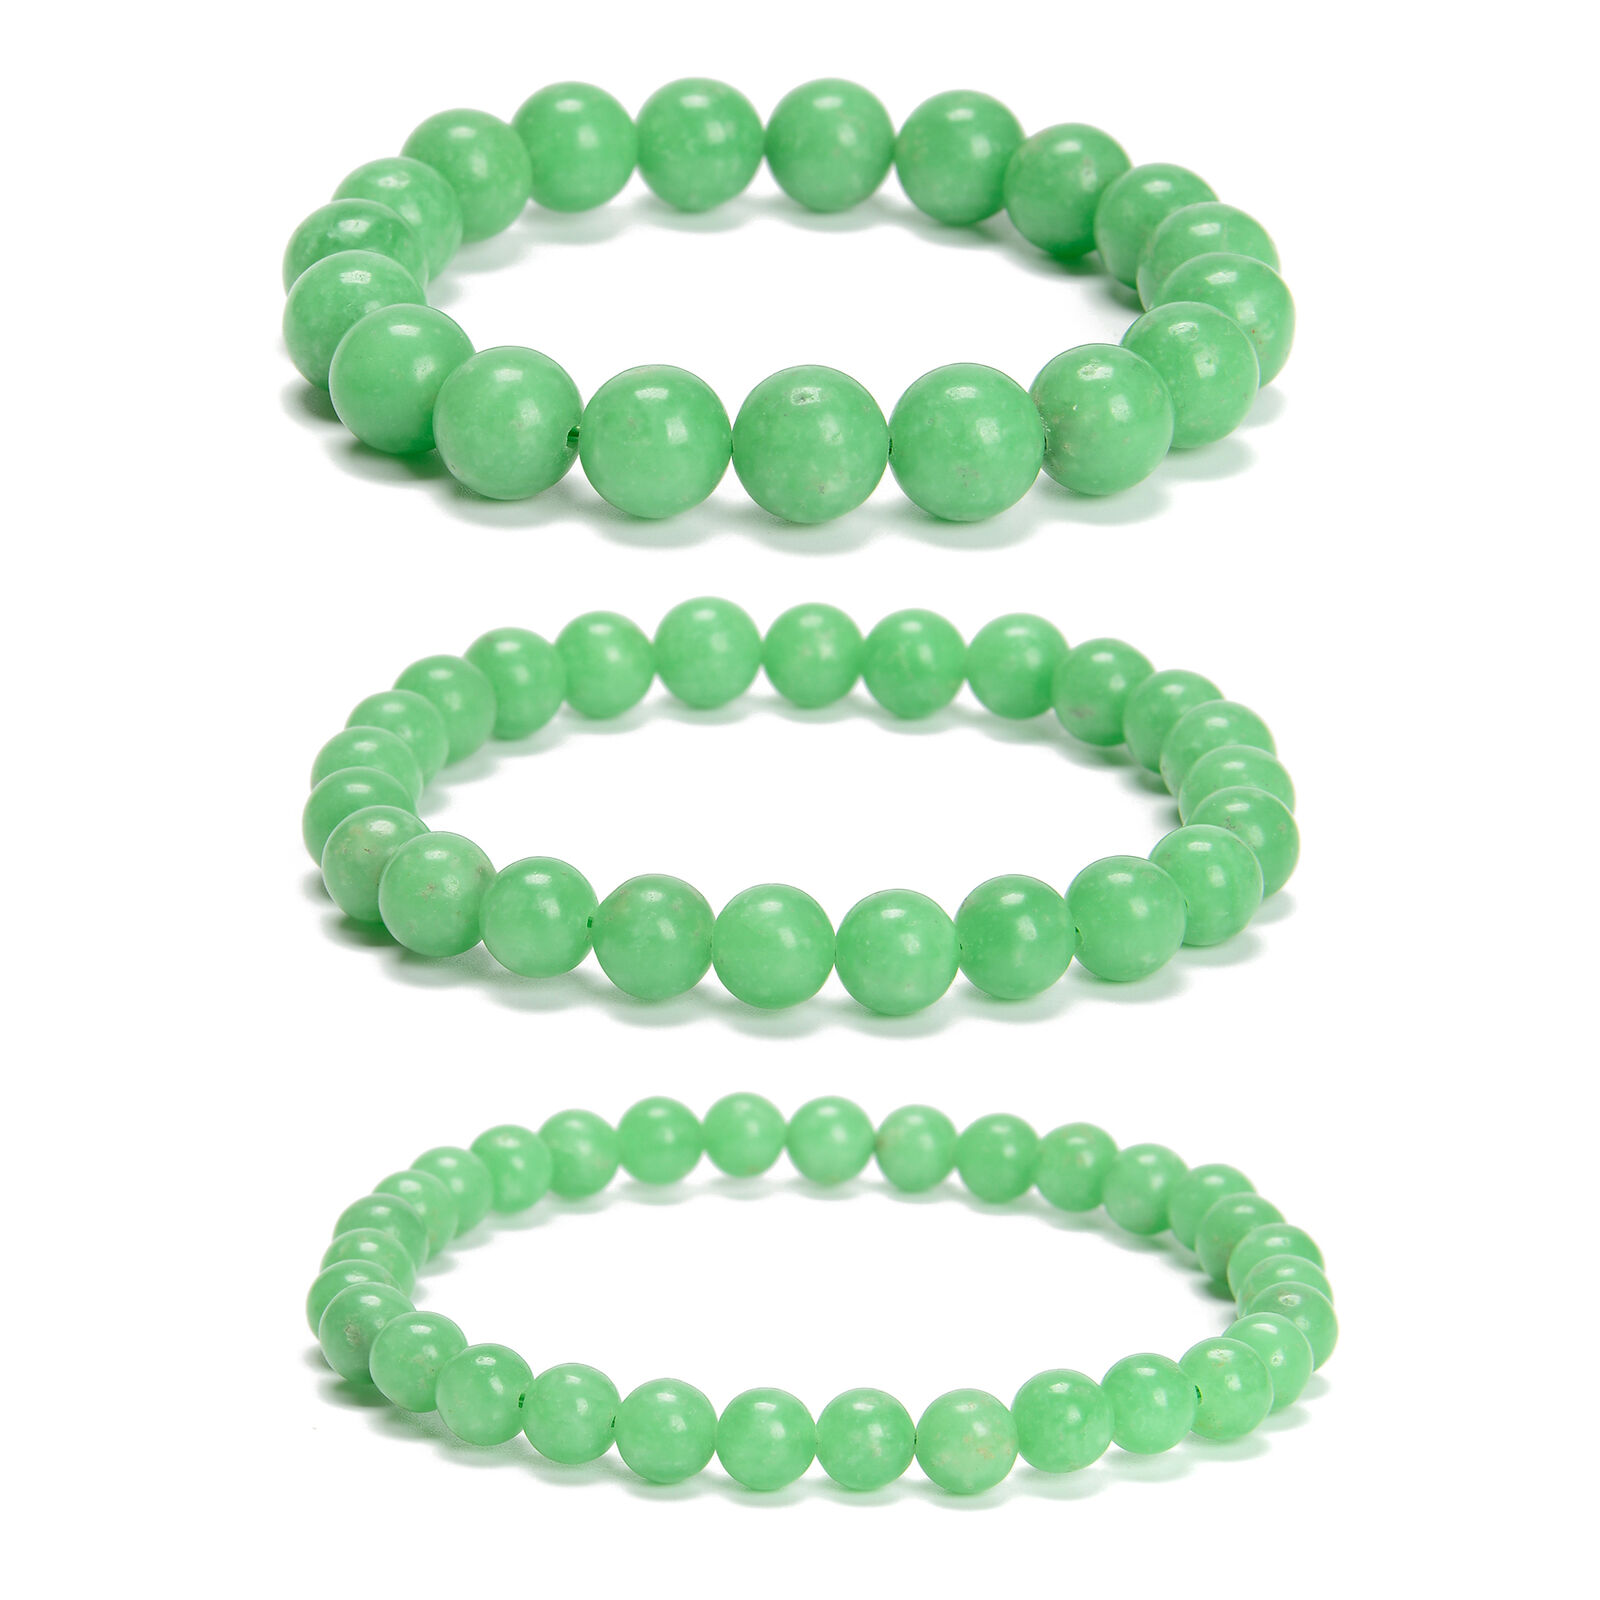 Green Jadeite Jade Smooth Round Beads Bracelet 6mm 8mm 10mm 7.5\'\'Length 3PCS/Set